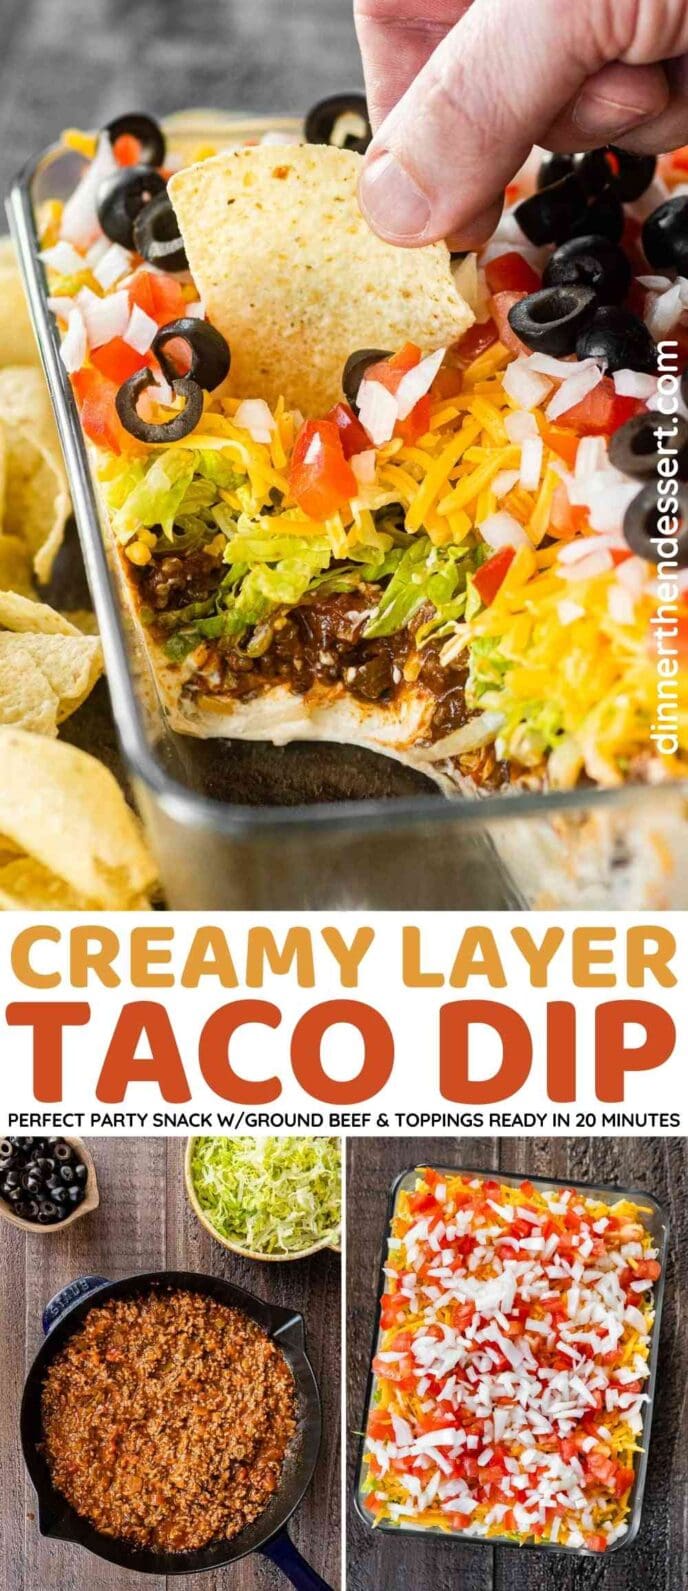 Creamy Layer Taco Dip Collage